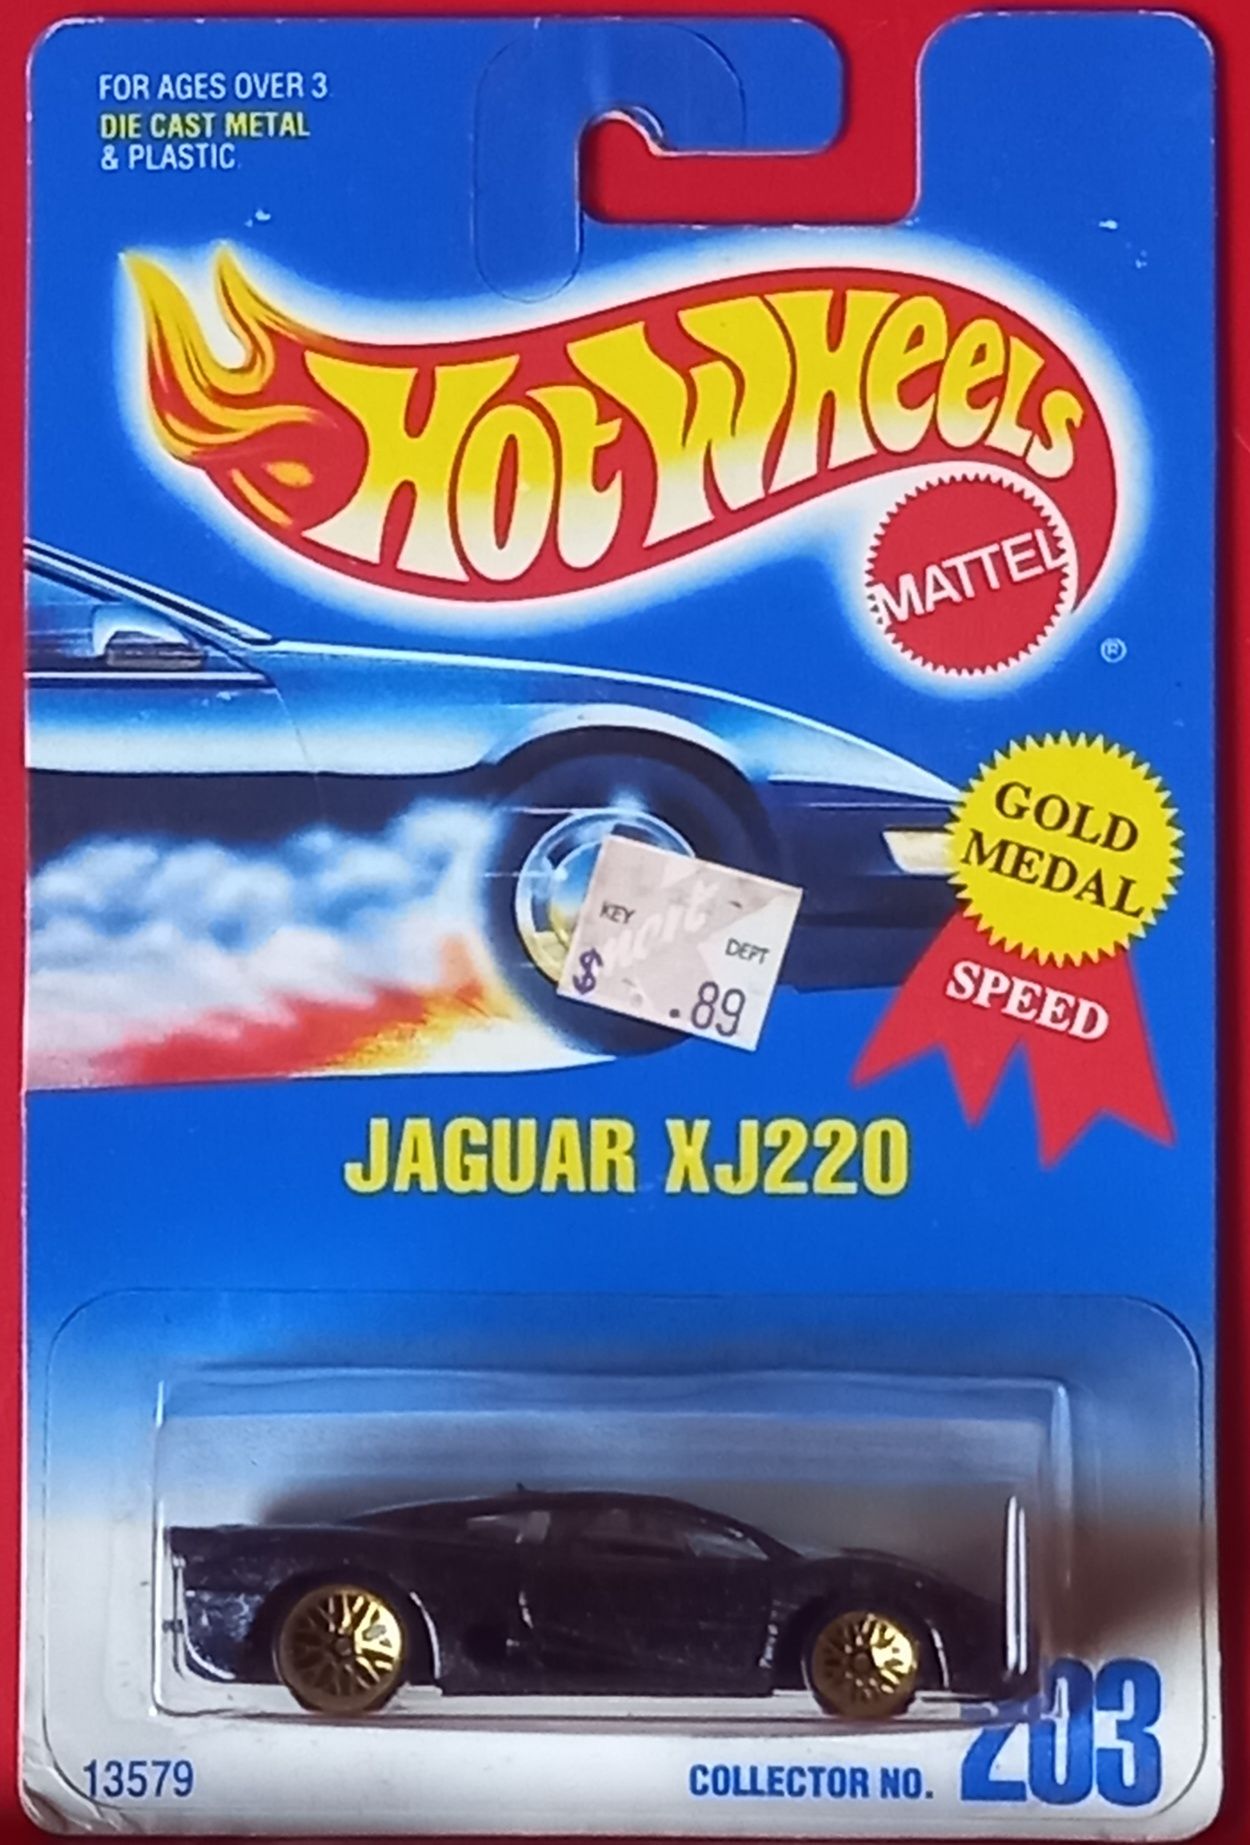 Jaguar xj220 hot wheels